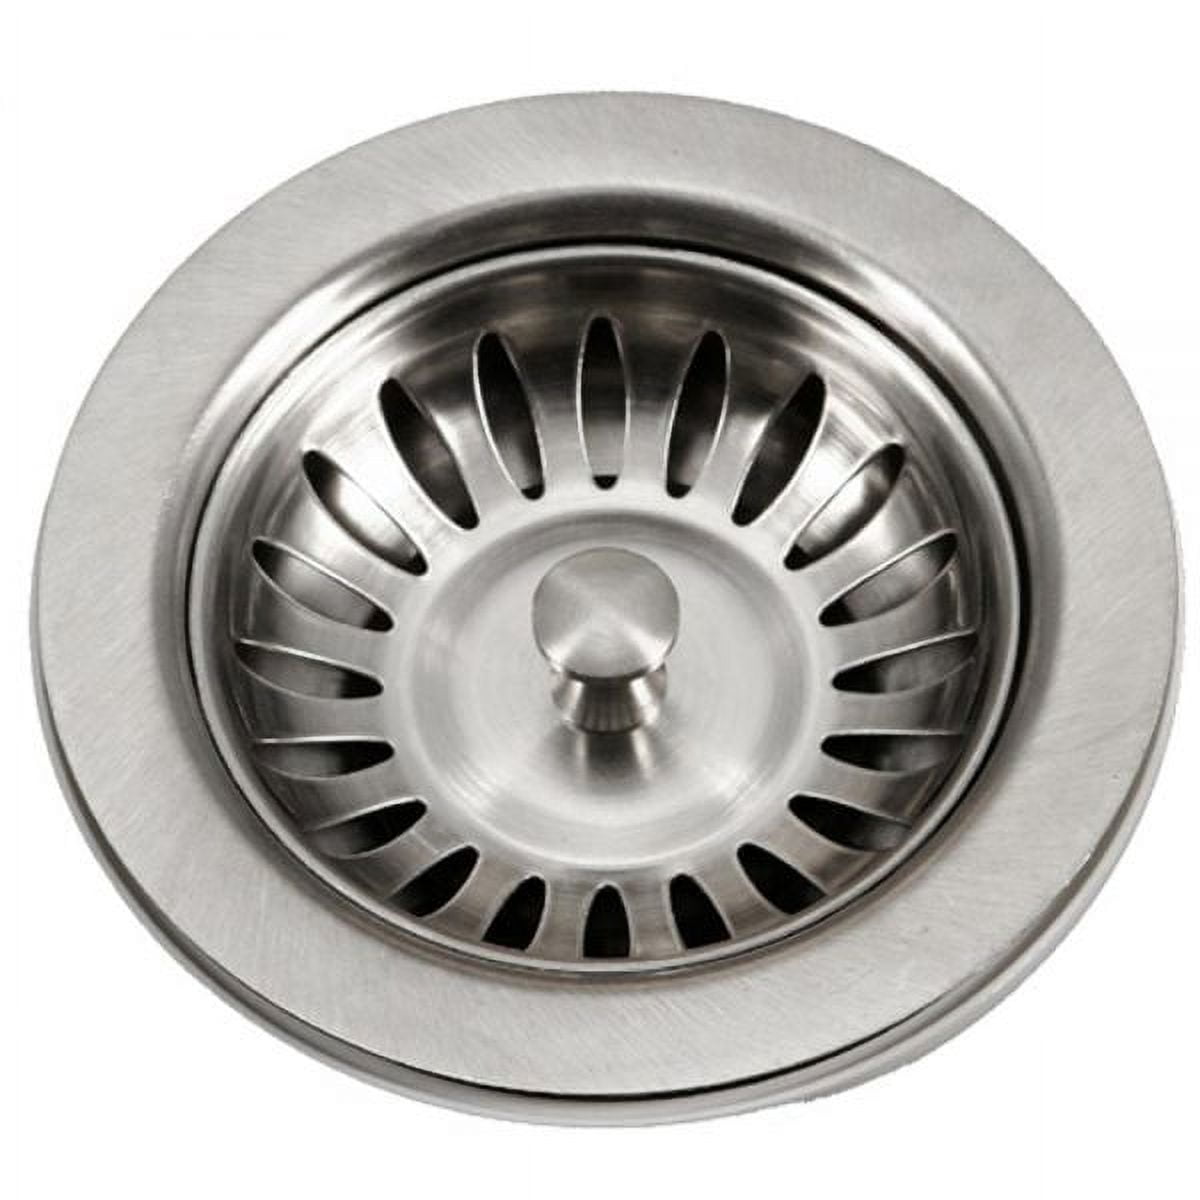 ProSource 24464-3L Sink Strainer with Adjustable Post, 3.3 in Dia, For:  3-1/2 to 4 in Dia Sink Basket #VORG4738712, 24464-3L